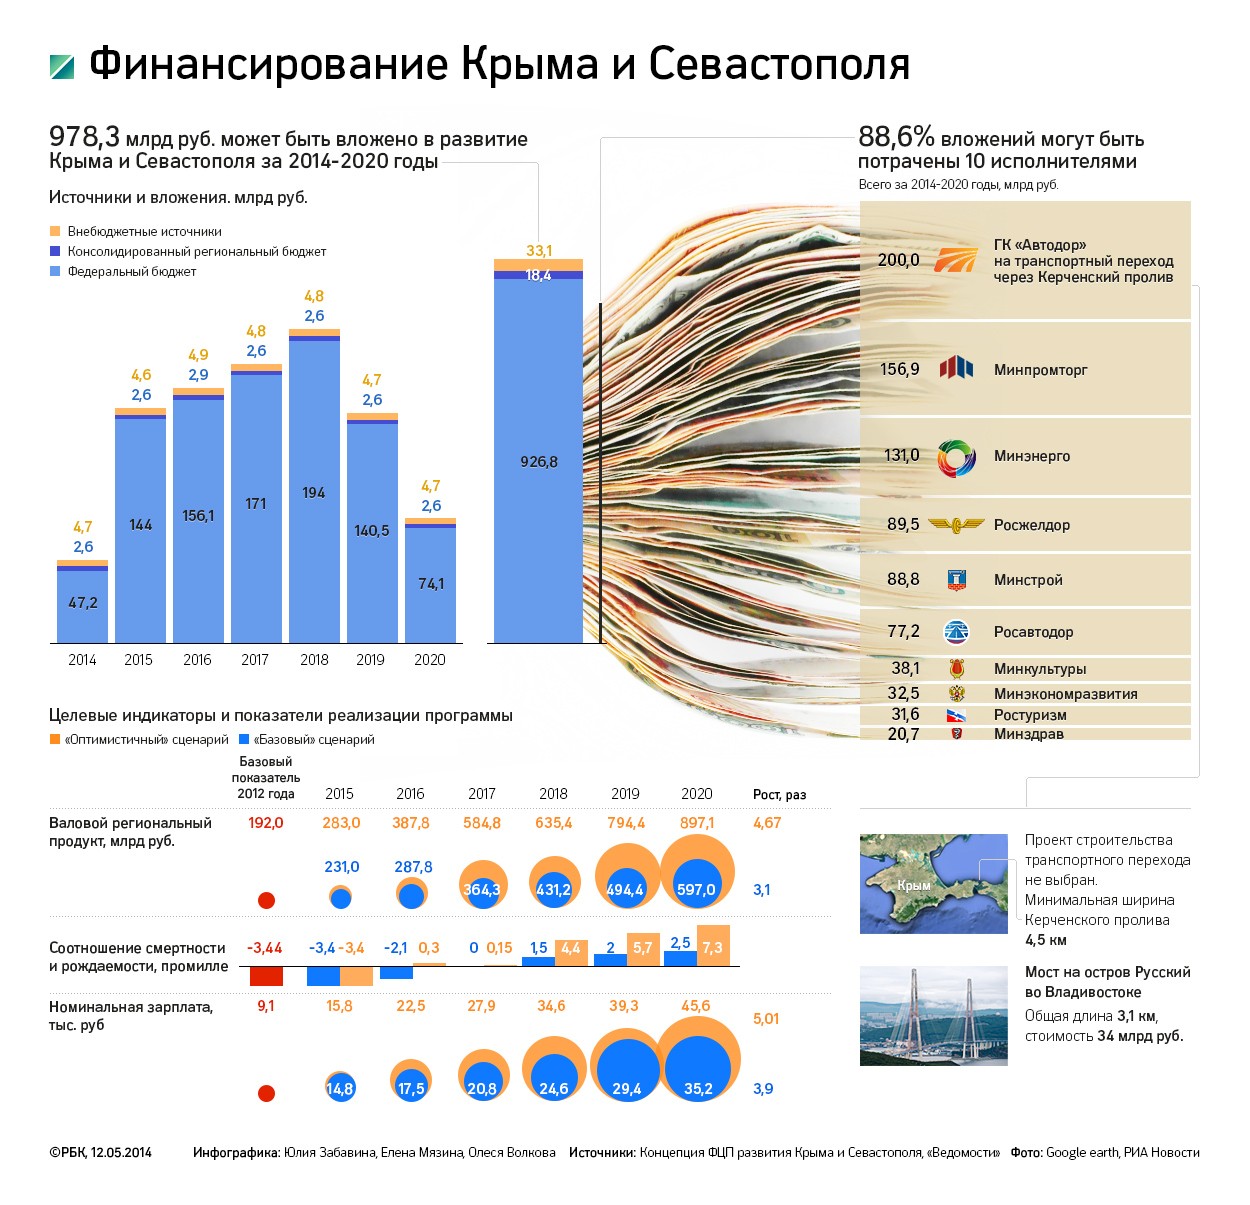 Программа развития Крыма "подешевела" почти на 500 млрд рублей